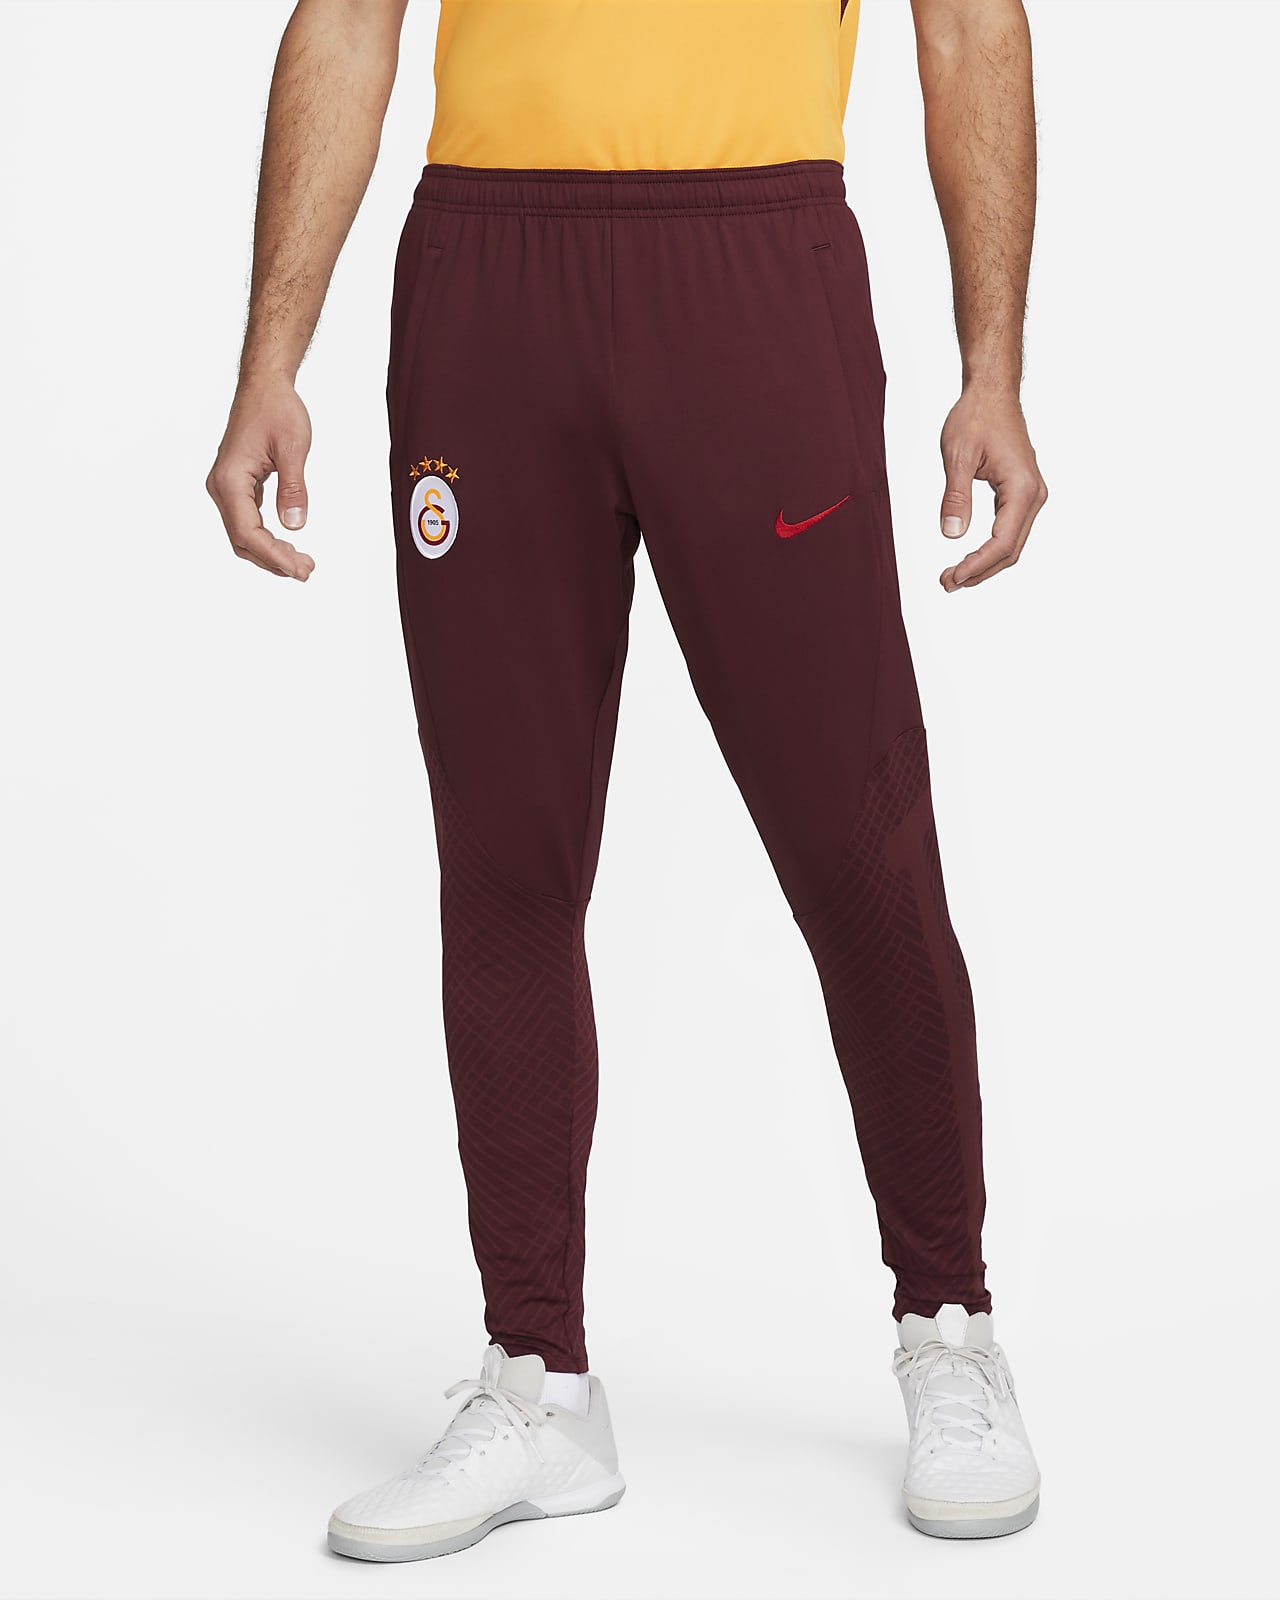 Galatasaray Strike Men's Nike Dri-FIT Football Pants